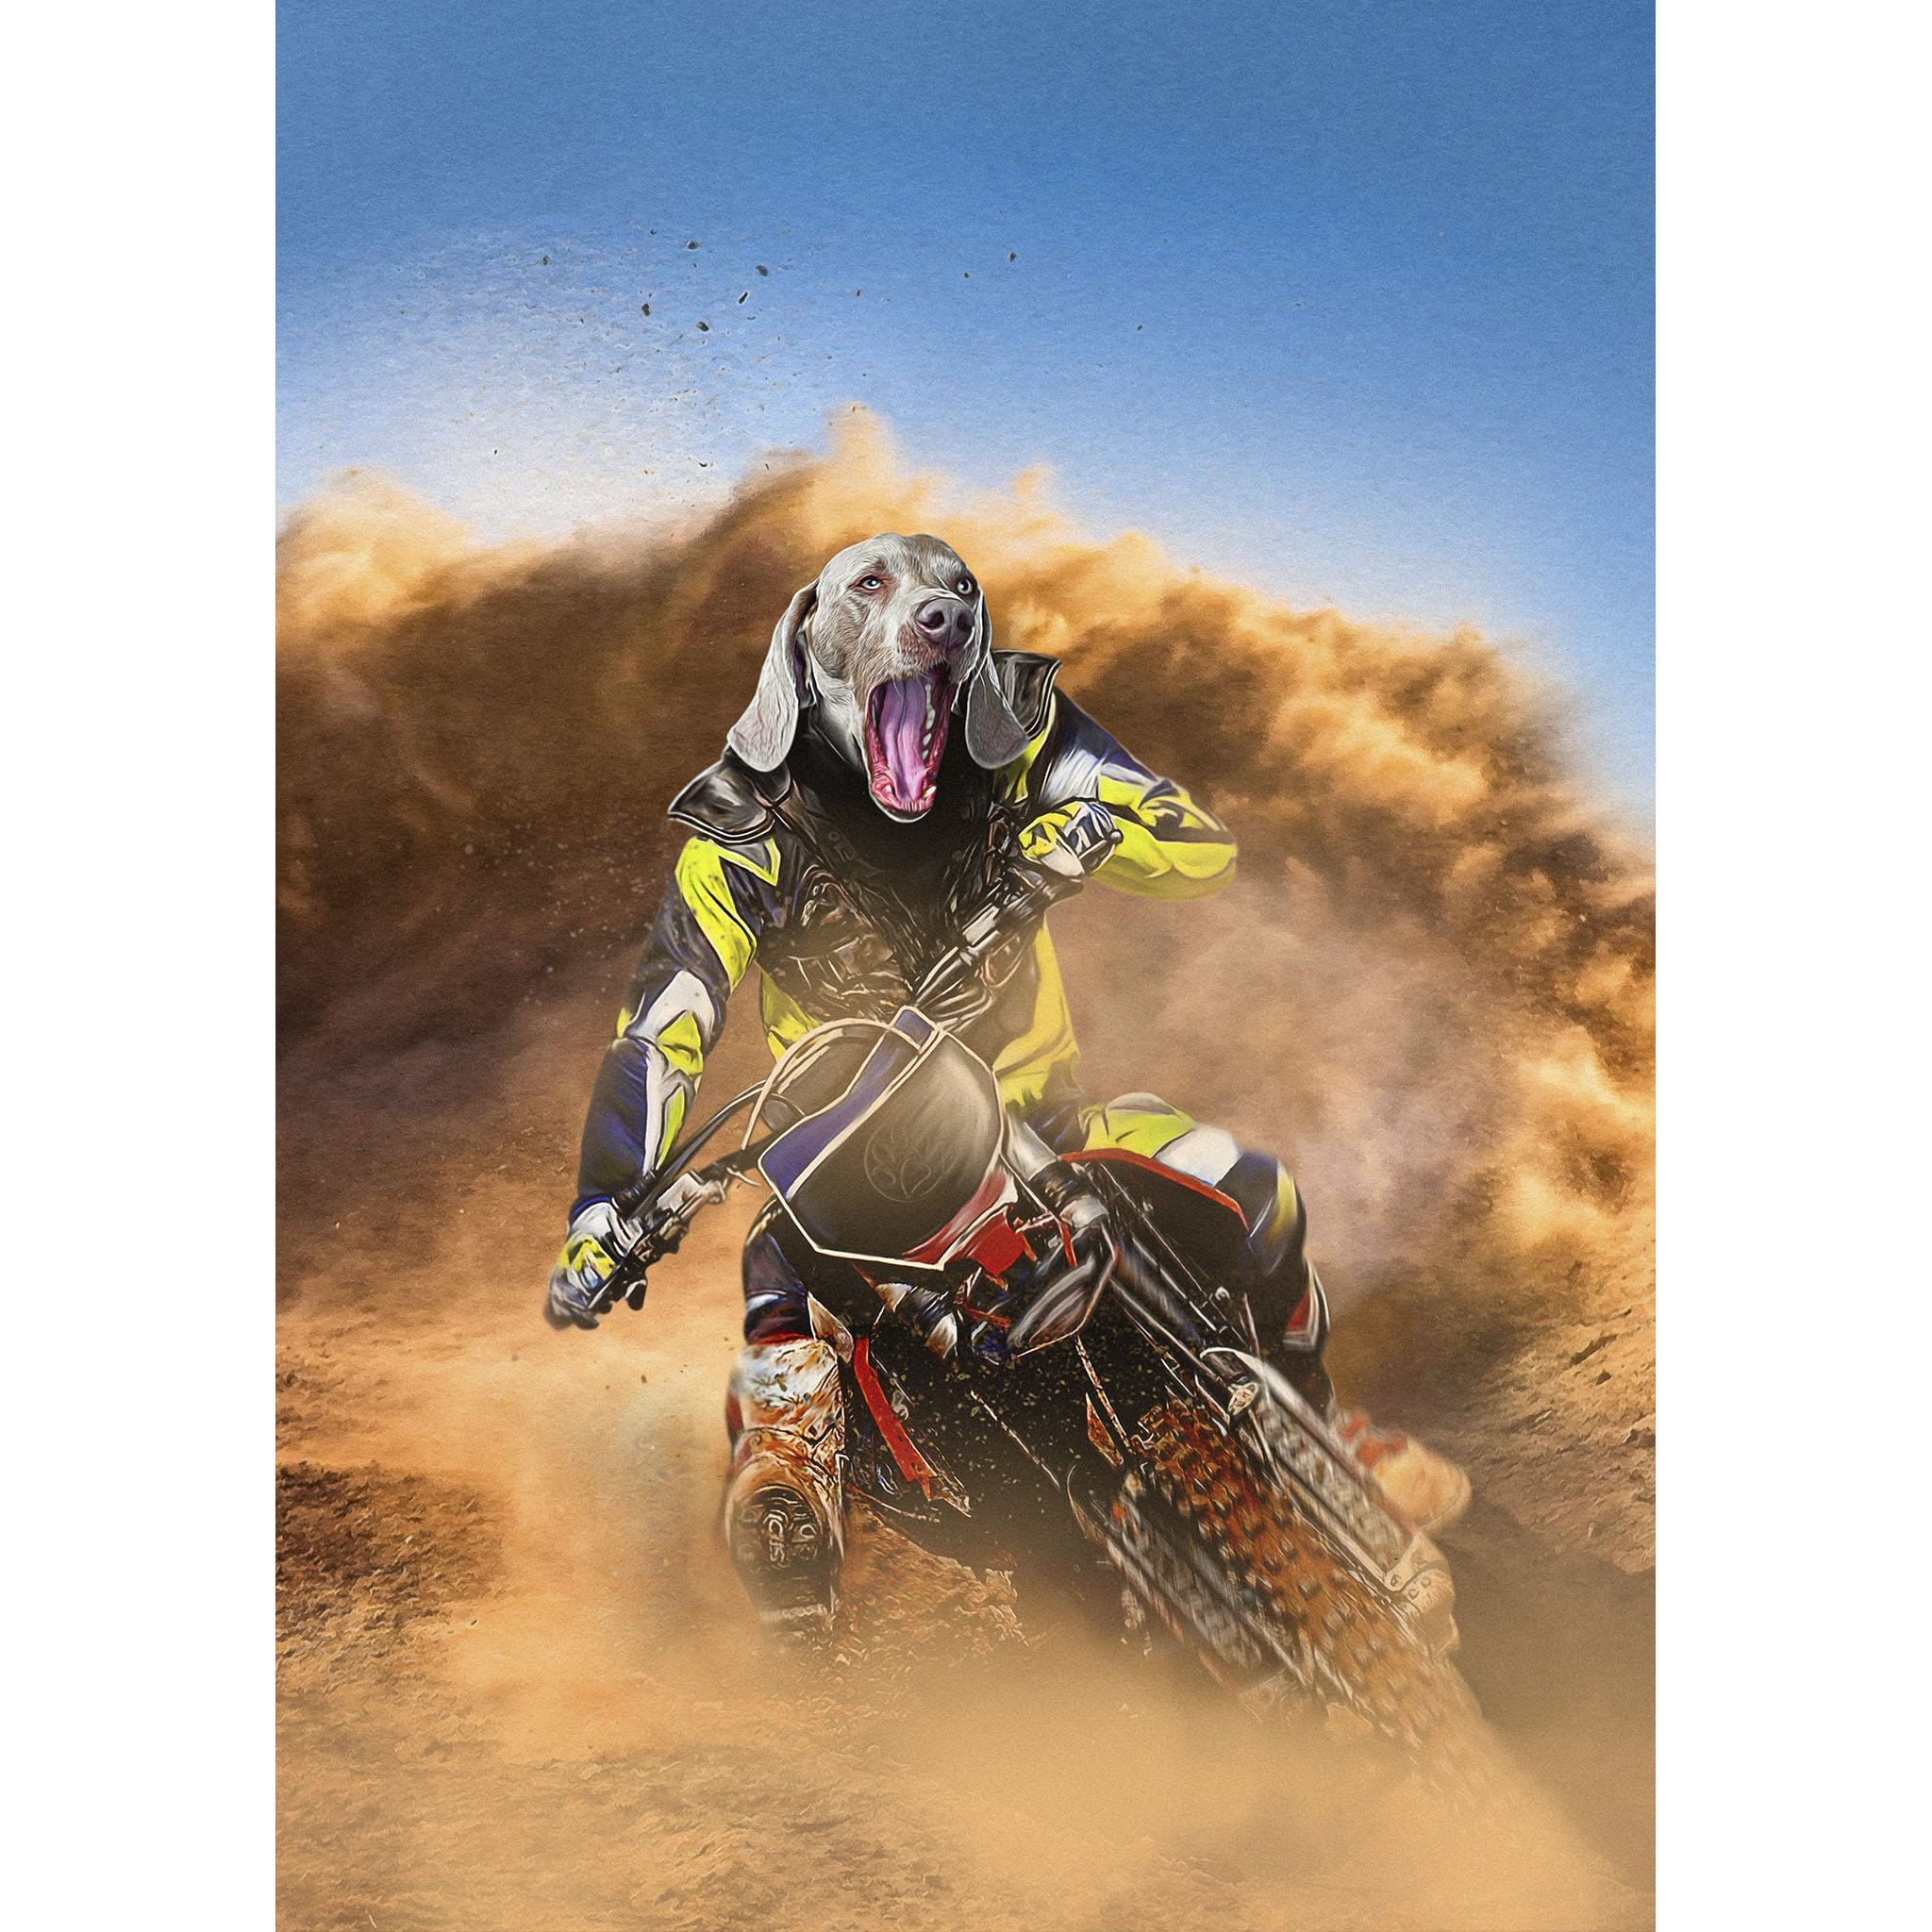 &#39;The Motocross Rider&#39; Digital Portrait